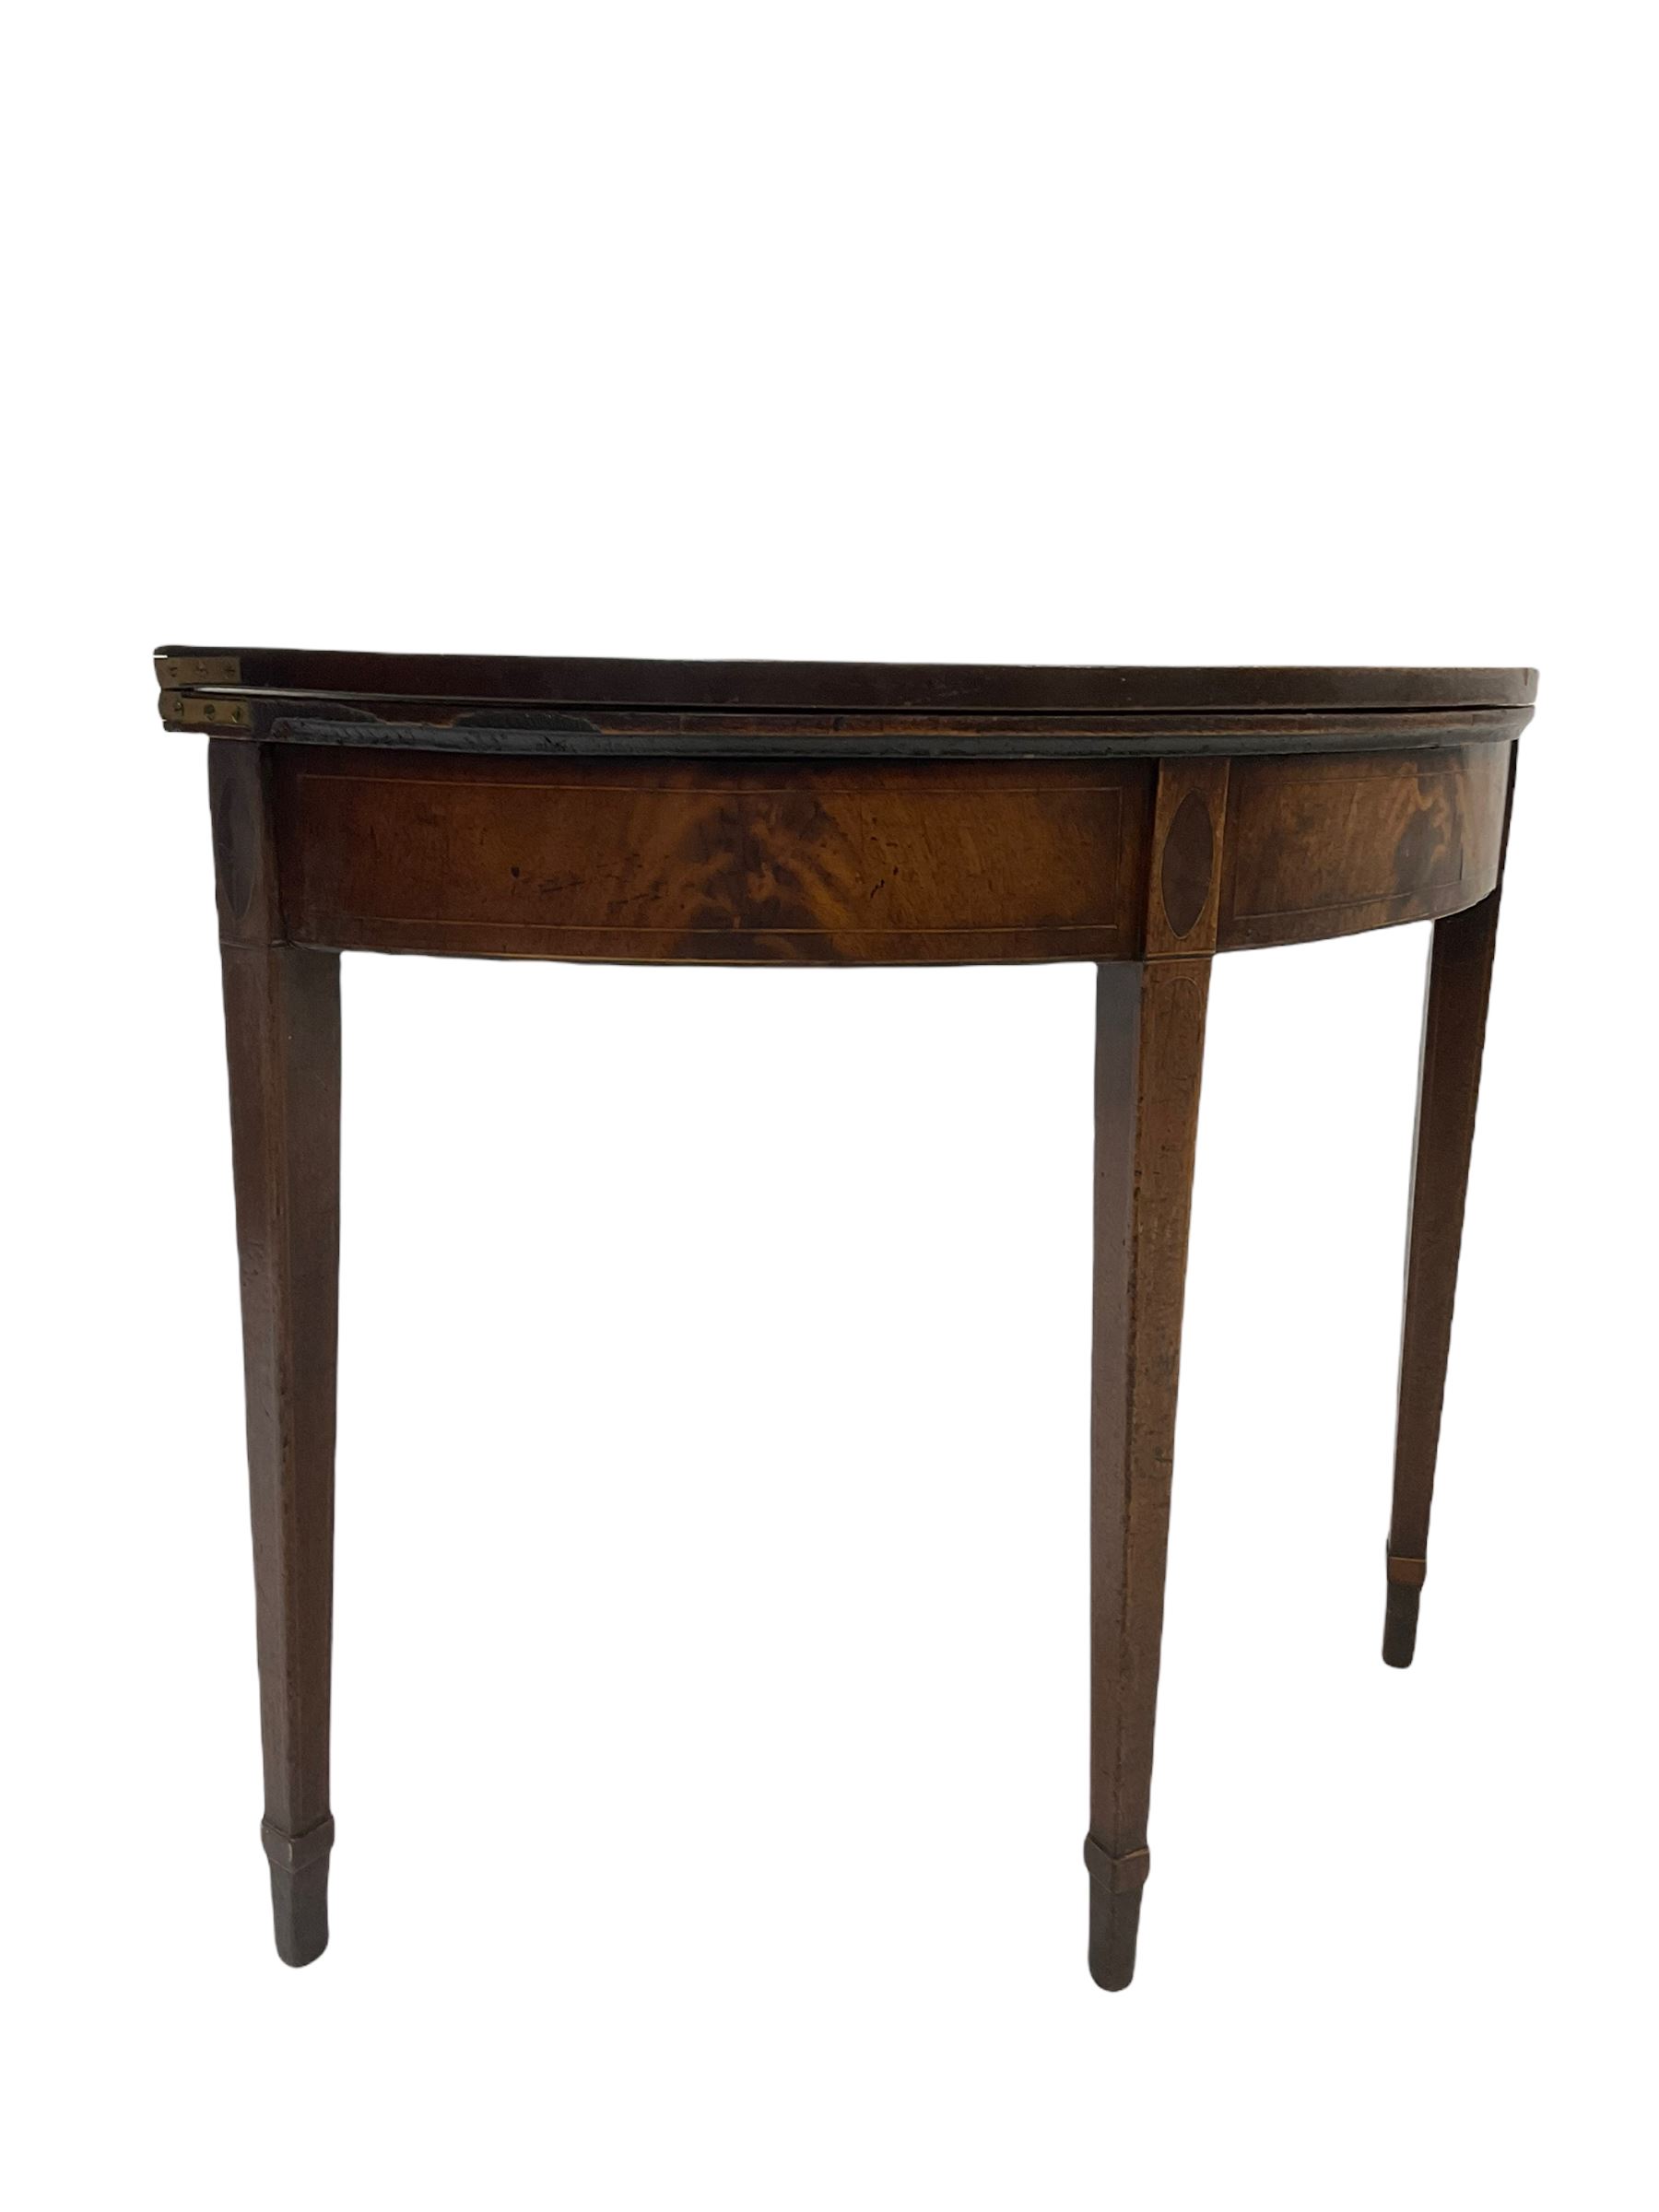 George III mahogany demi-lune tea table - Image 2 of 5